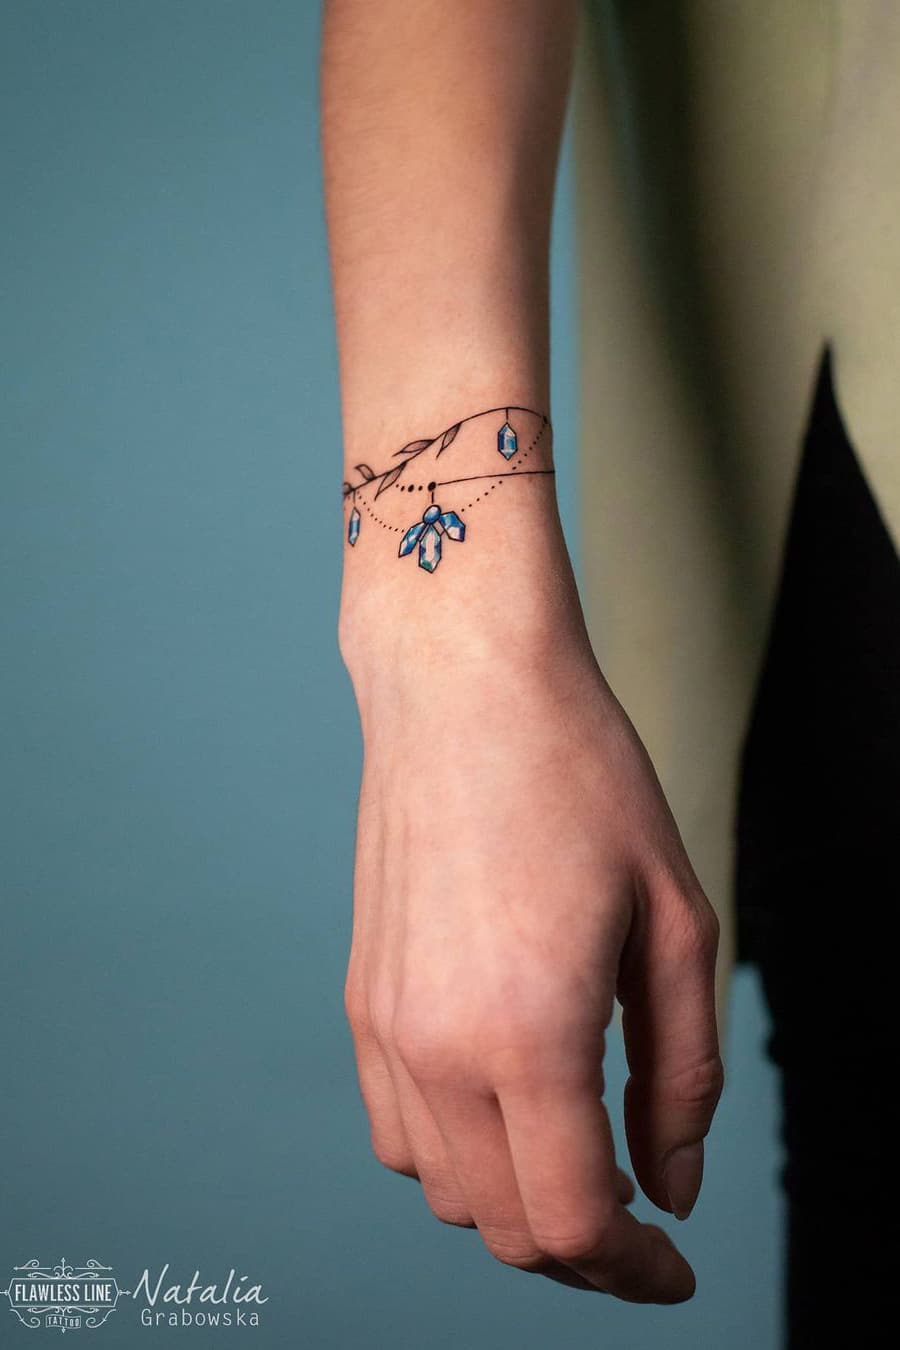 Sapphire bracelet tattoo